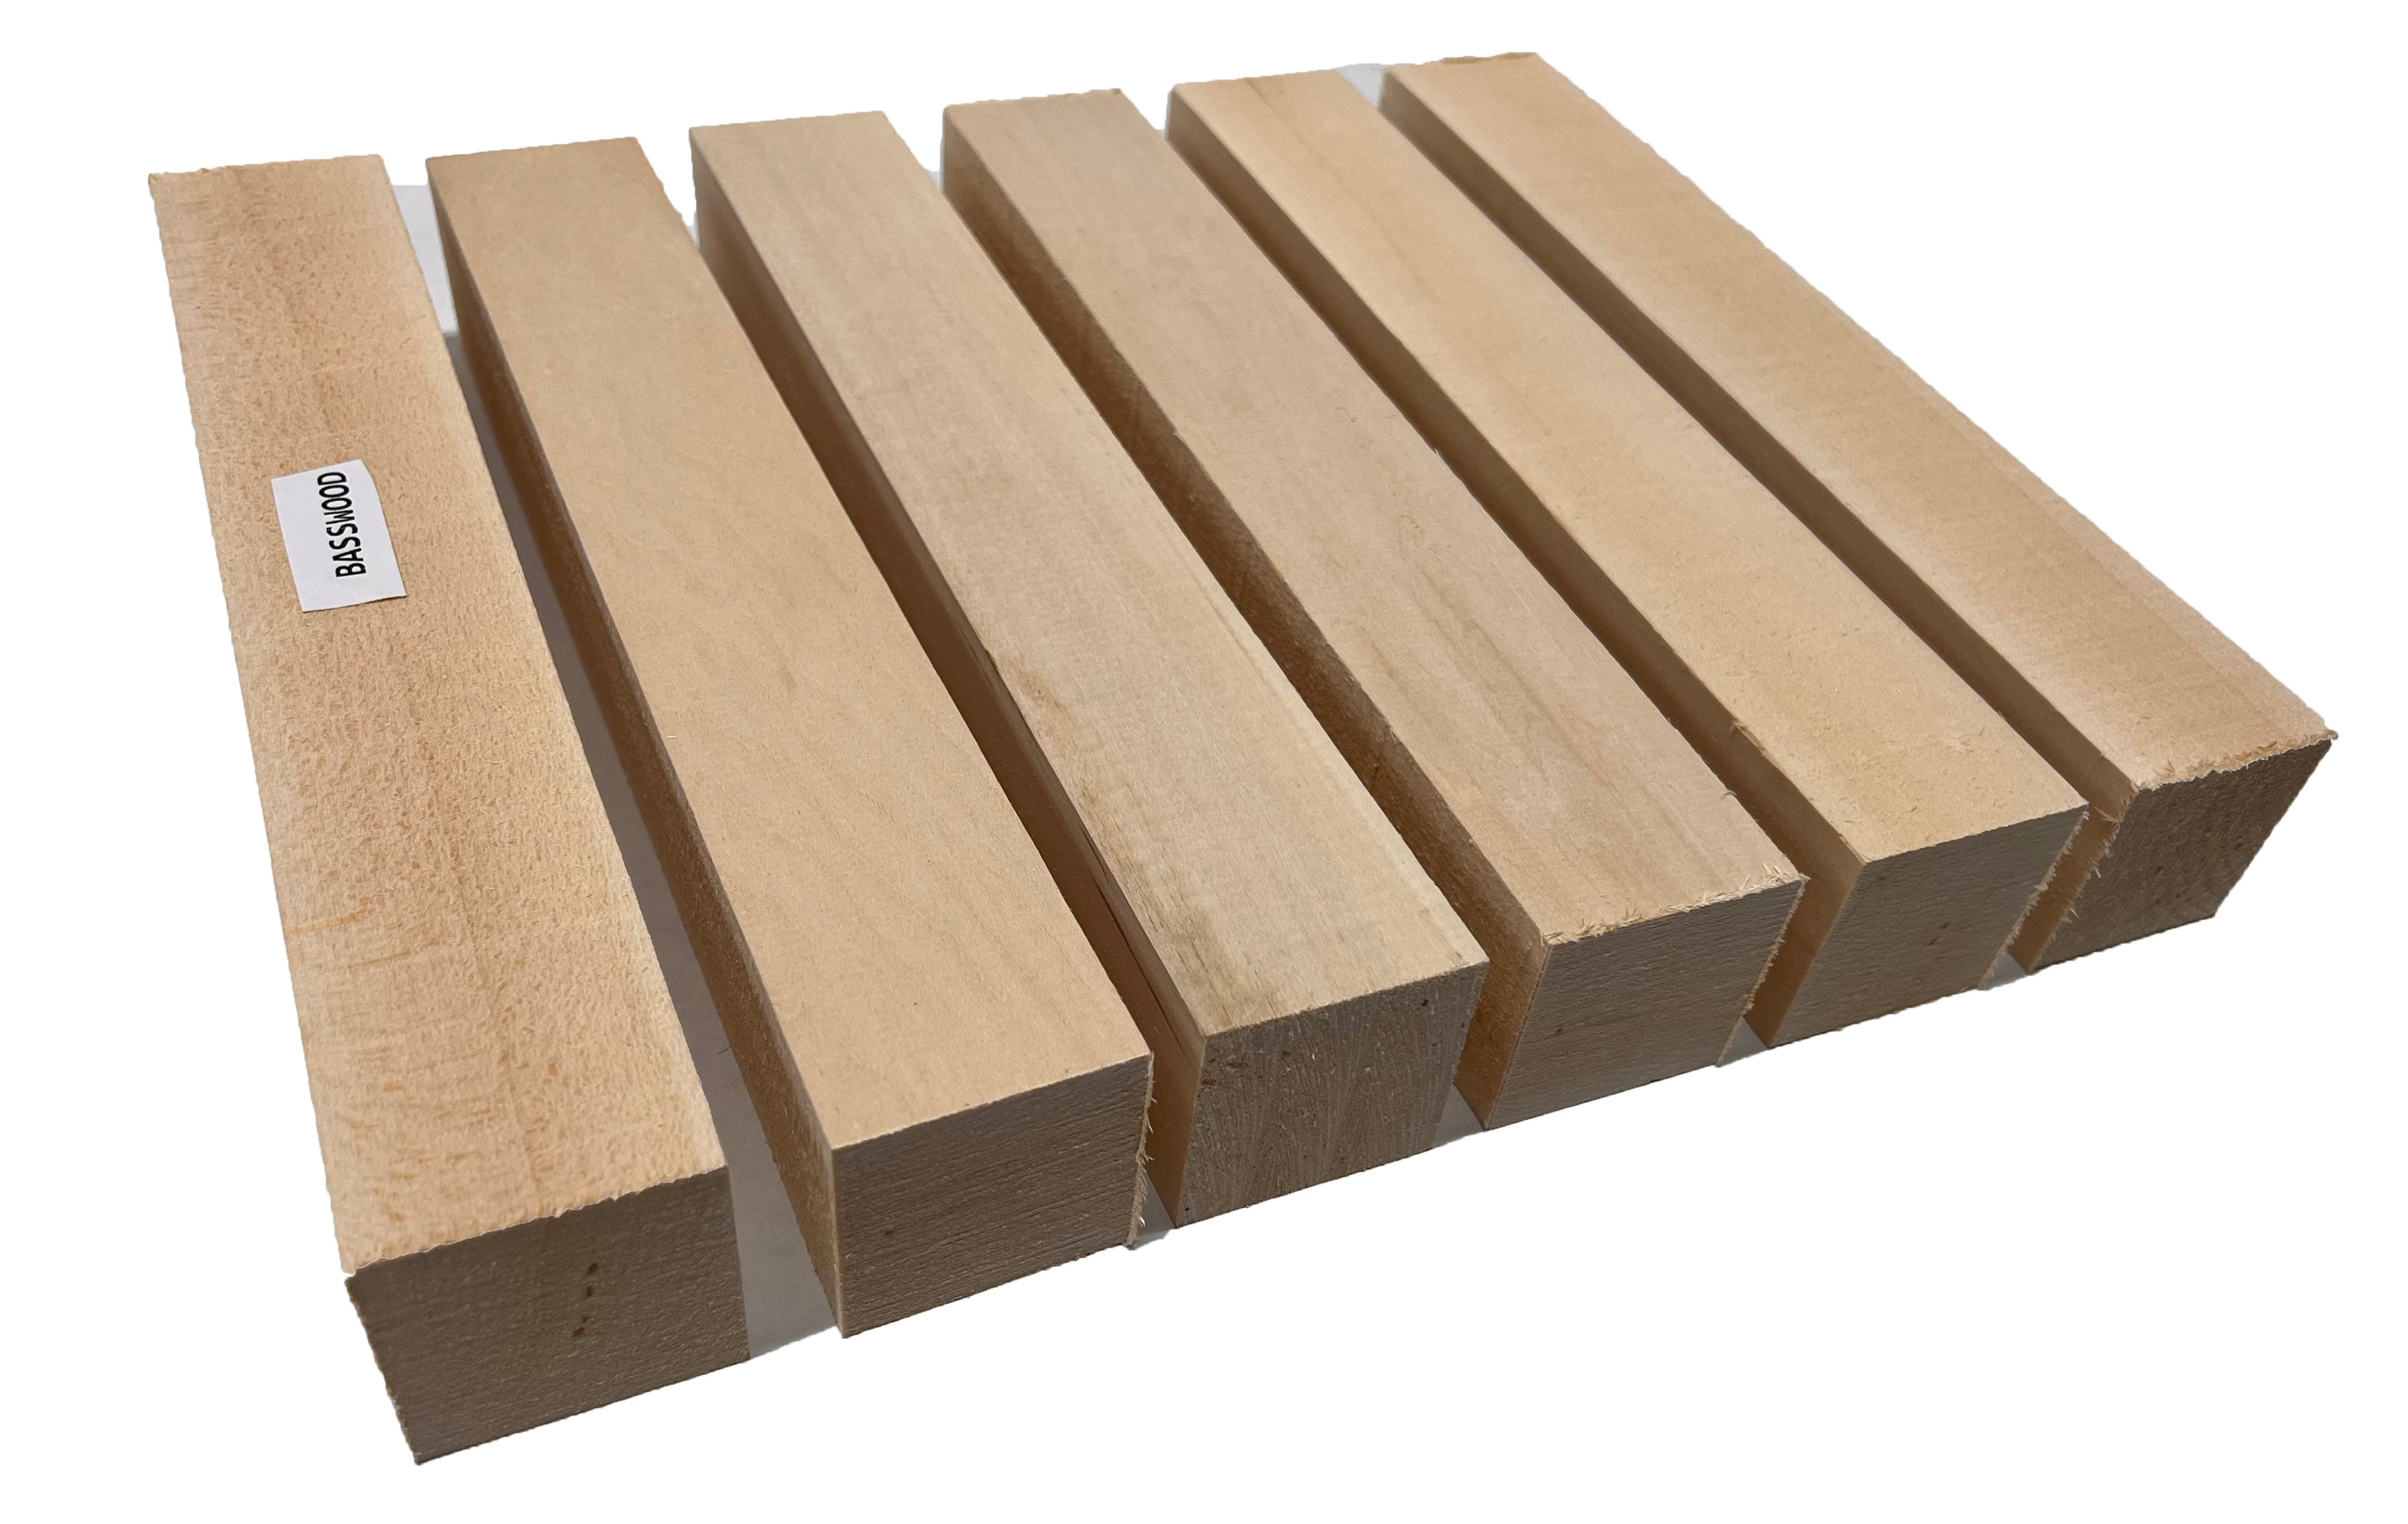 Tablero de tilo para tallar, madera en blanco para tallar madera,  decoración, scrapbooking